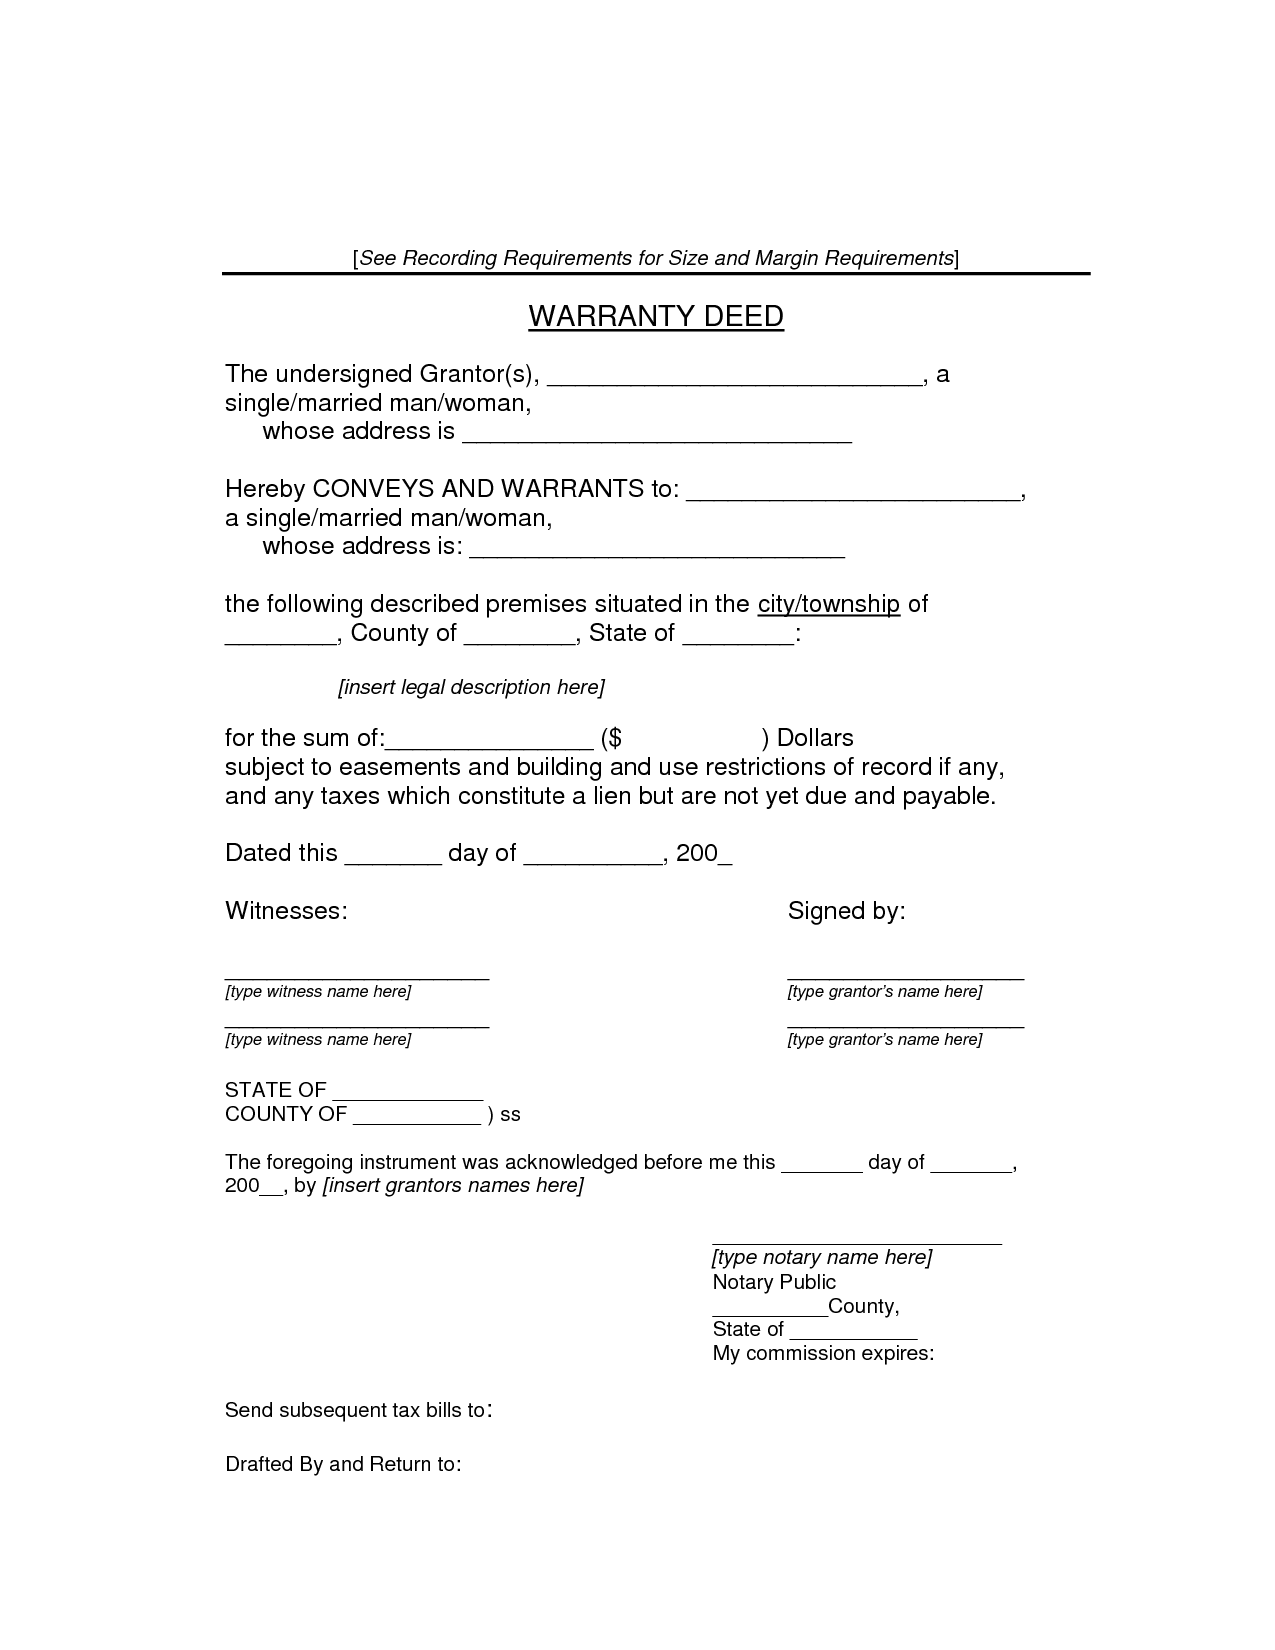 General Warranty Deed Sample Free Printable Documents